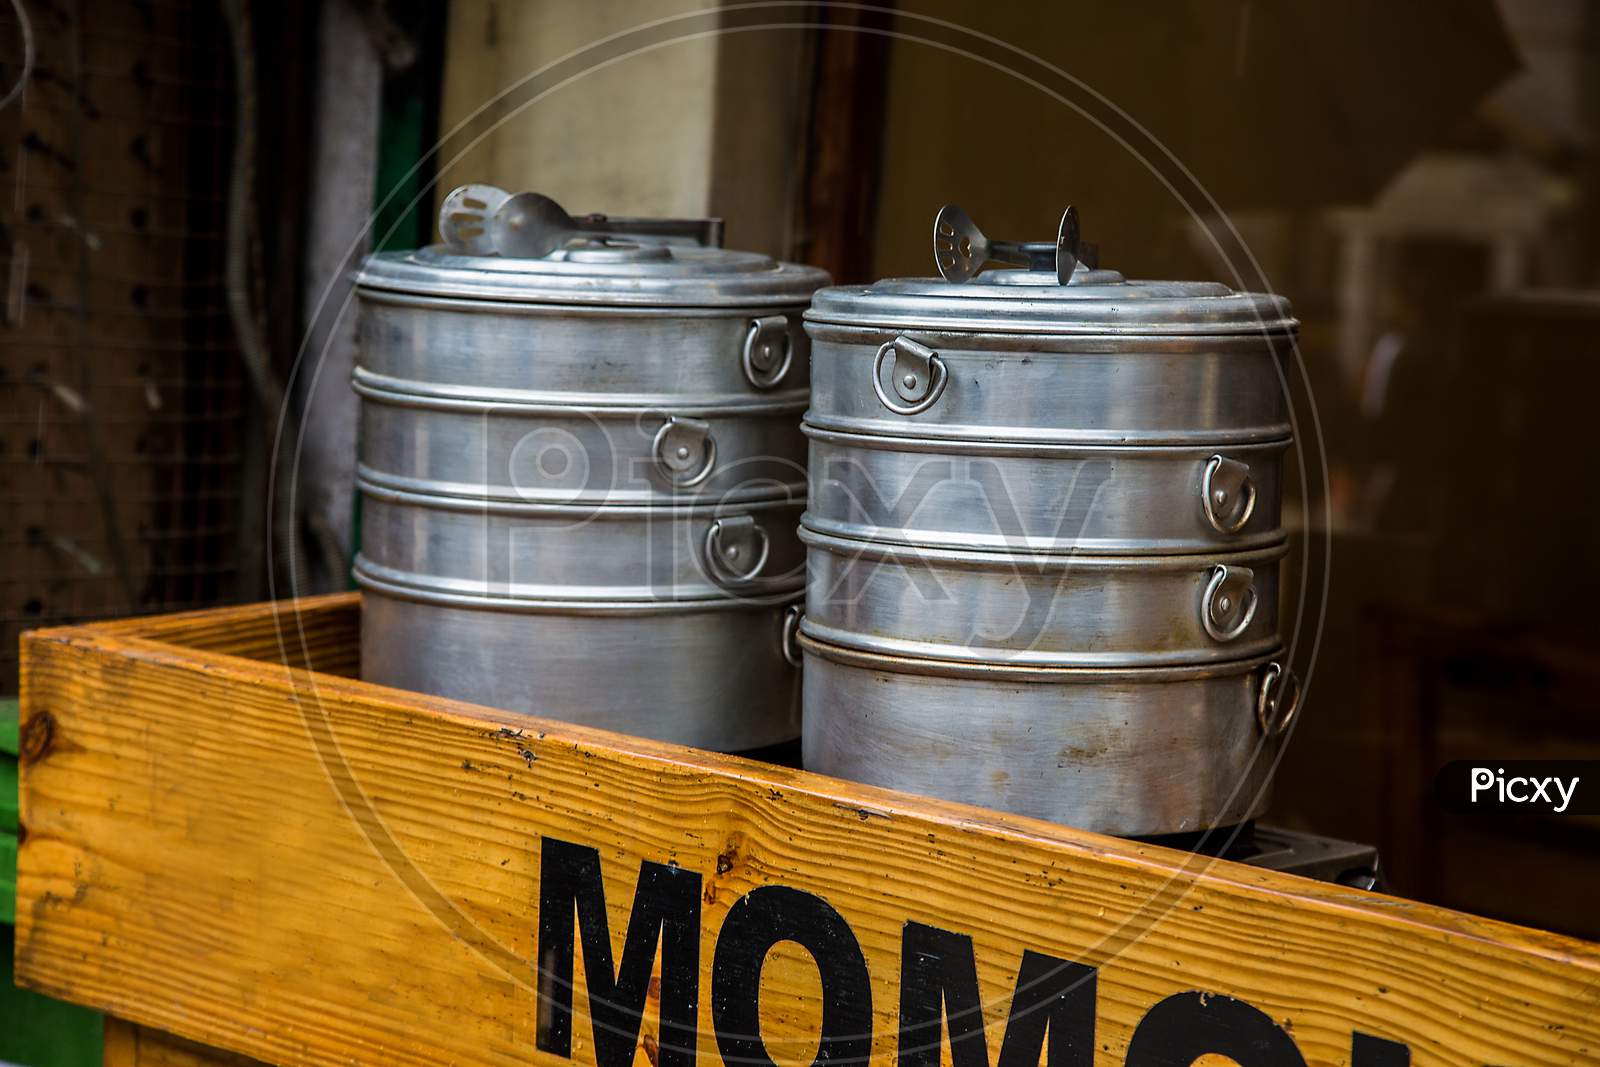 Dumplings,Momos In A Traditional Steel Vessels Steamer,Street Food, Healthy Homemade Asian Cuisine Concept. - Image